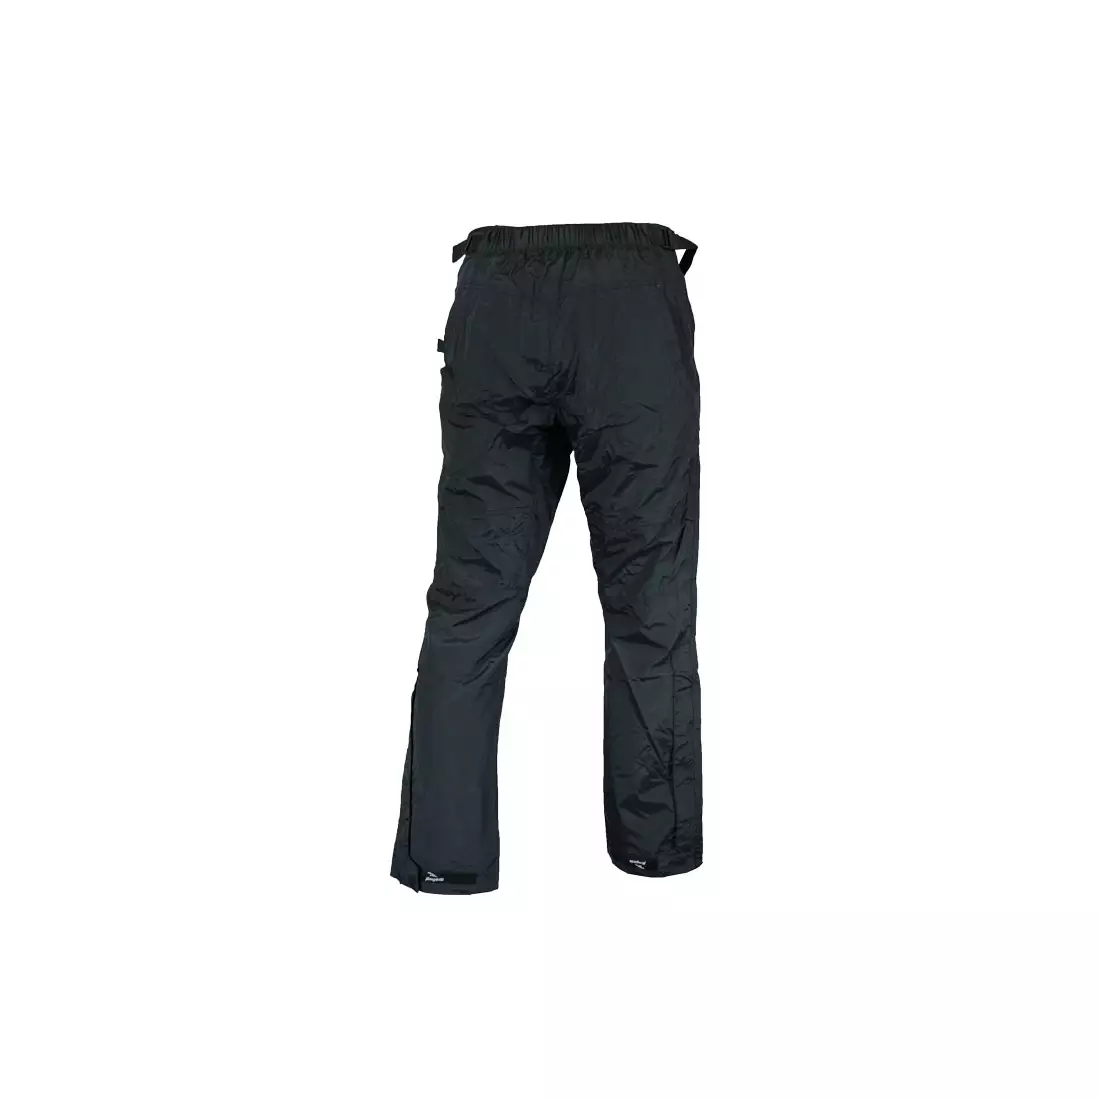 ROGELLI CASERTA 1.0 - loose long MTB pants